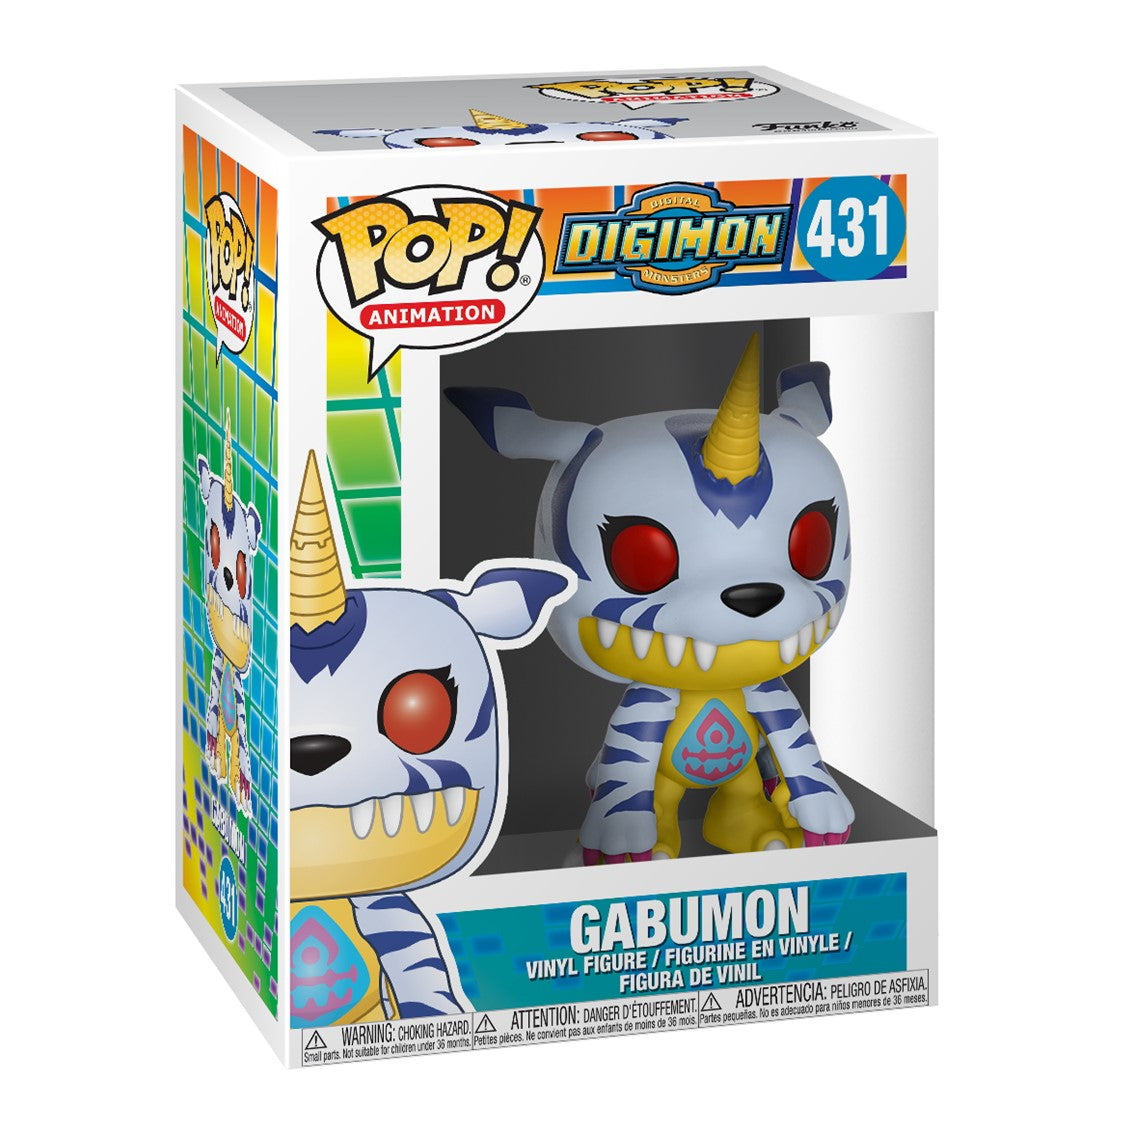 [Preventa] FUNKO POP! Digimon - Gabumon 431 [Fecha de lanzamiento por determinar]